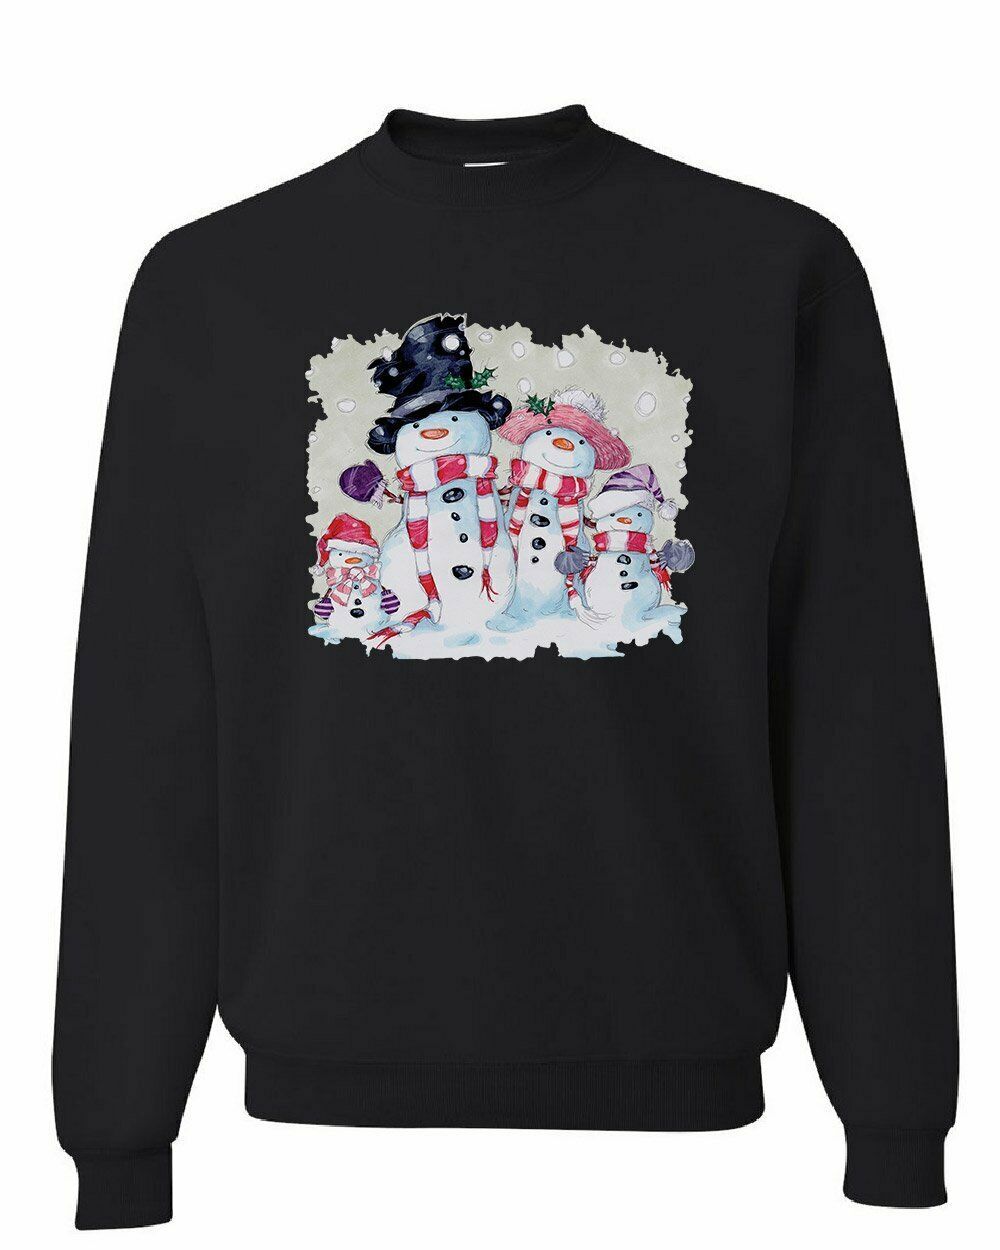 Snowman Family Ugly Christmas Sweatshirt Sweatshirt Black S